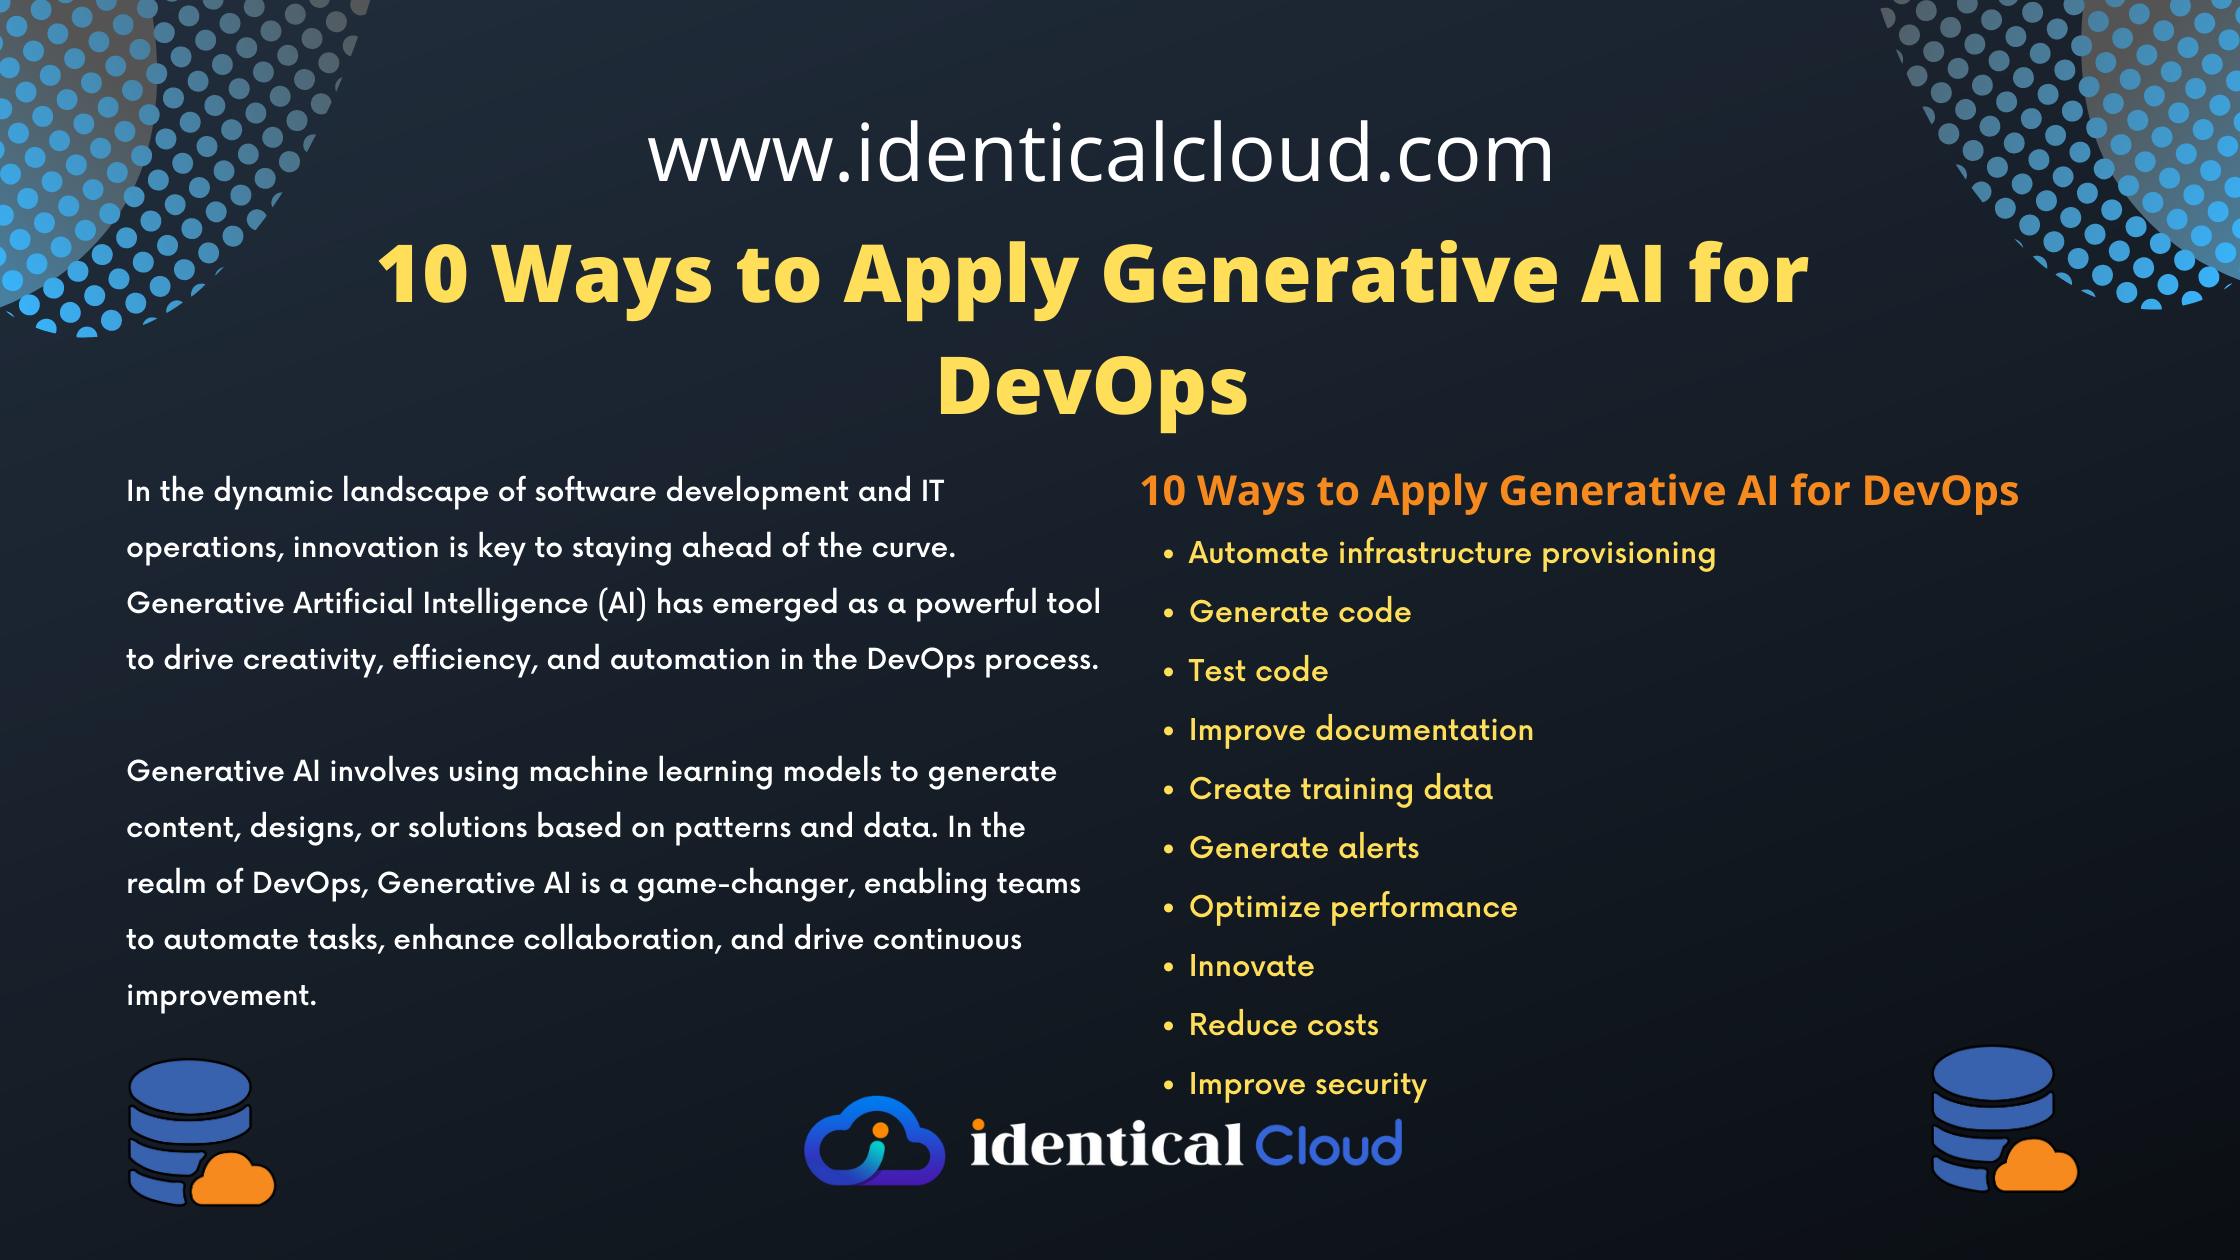 10 Ways to Apply Generative AI for DevOps - identicalcloud.com